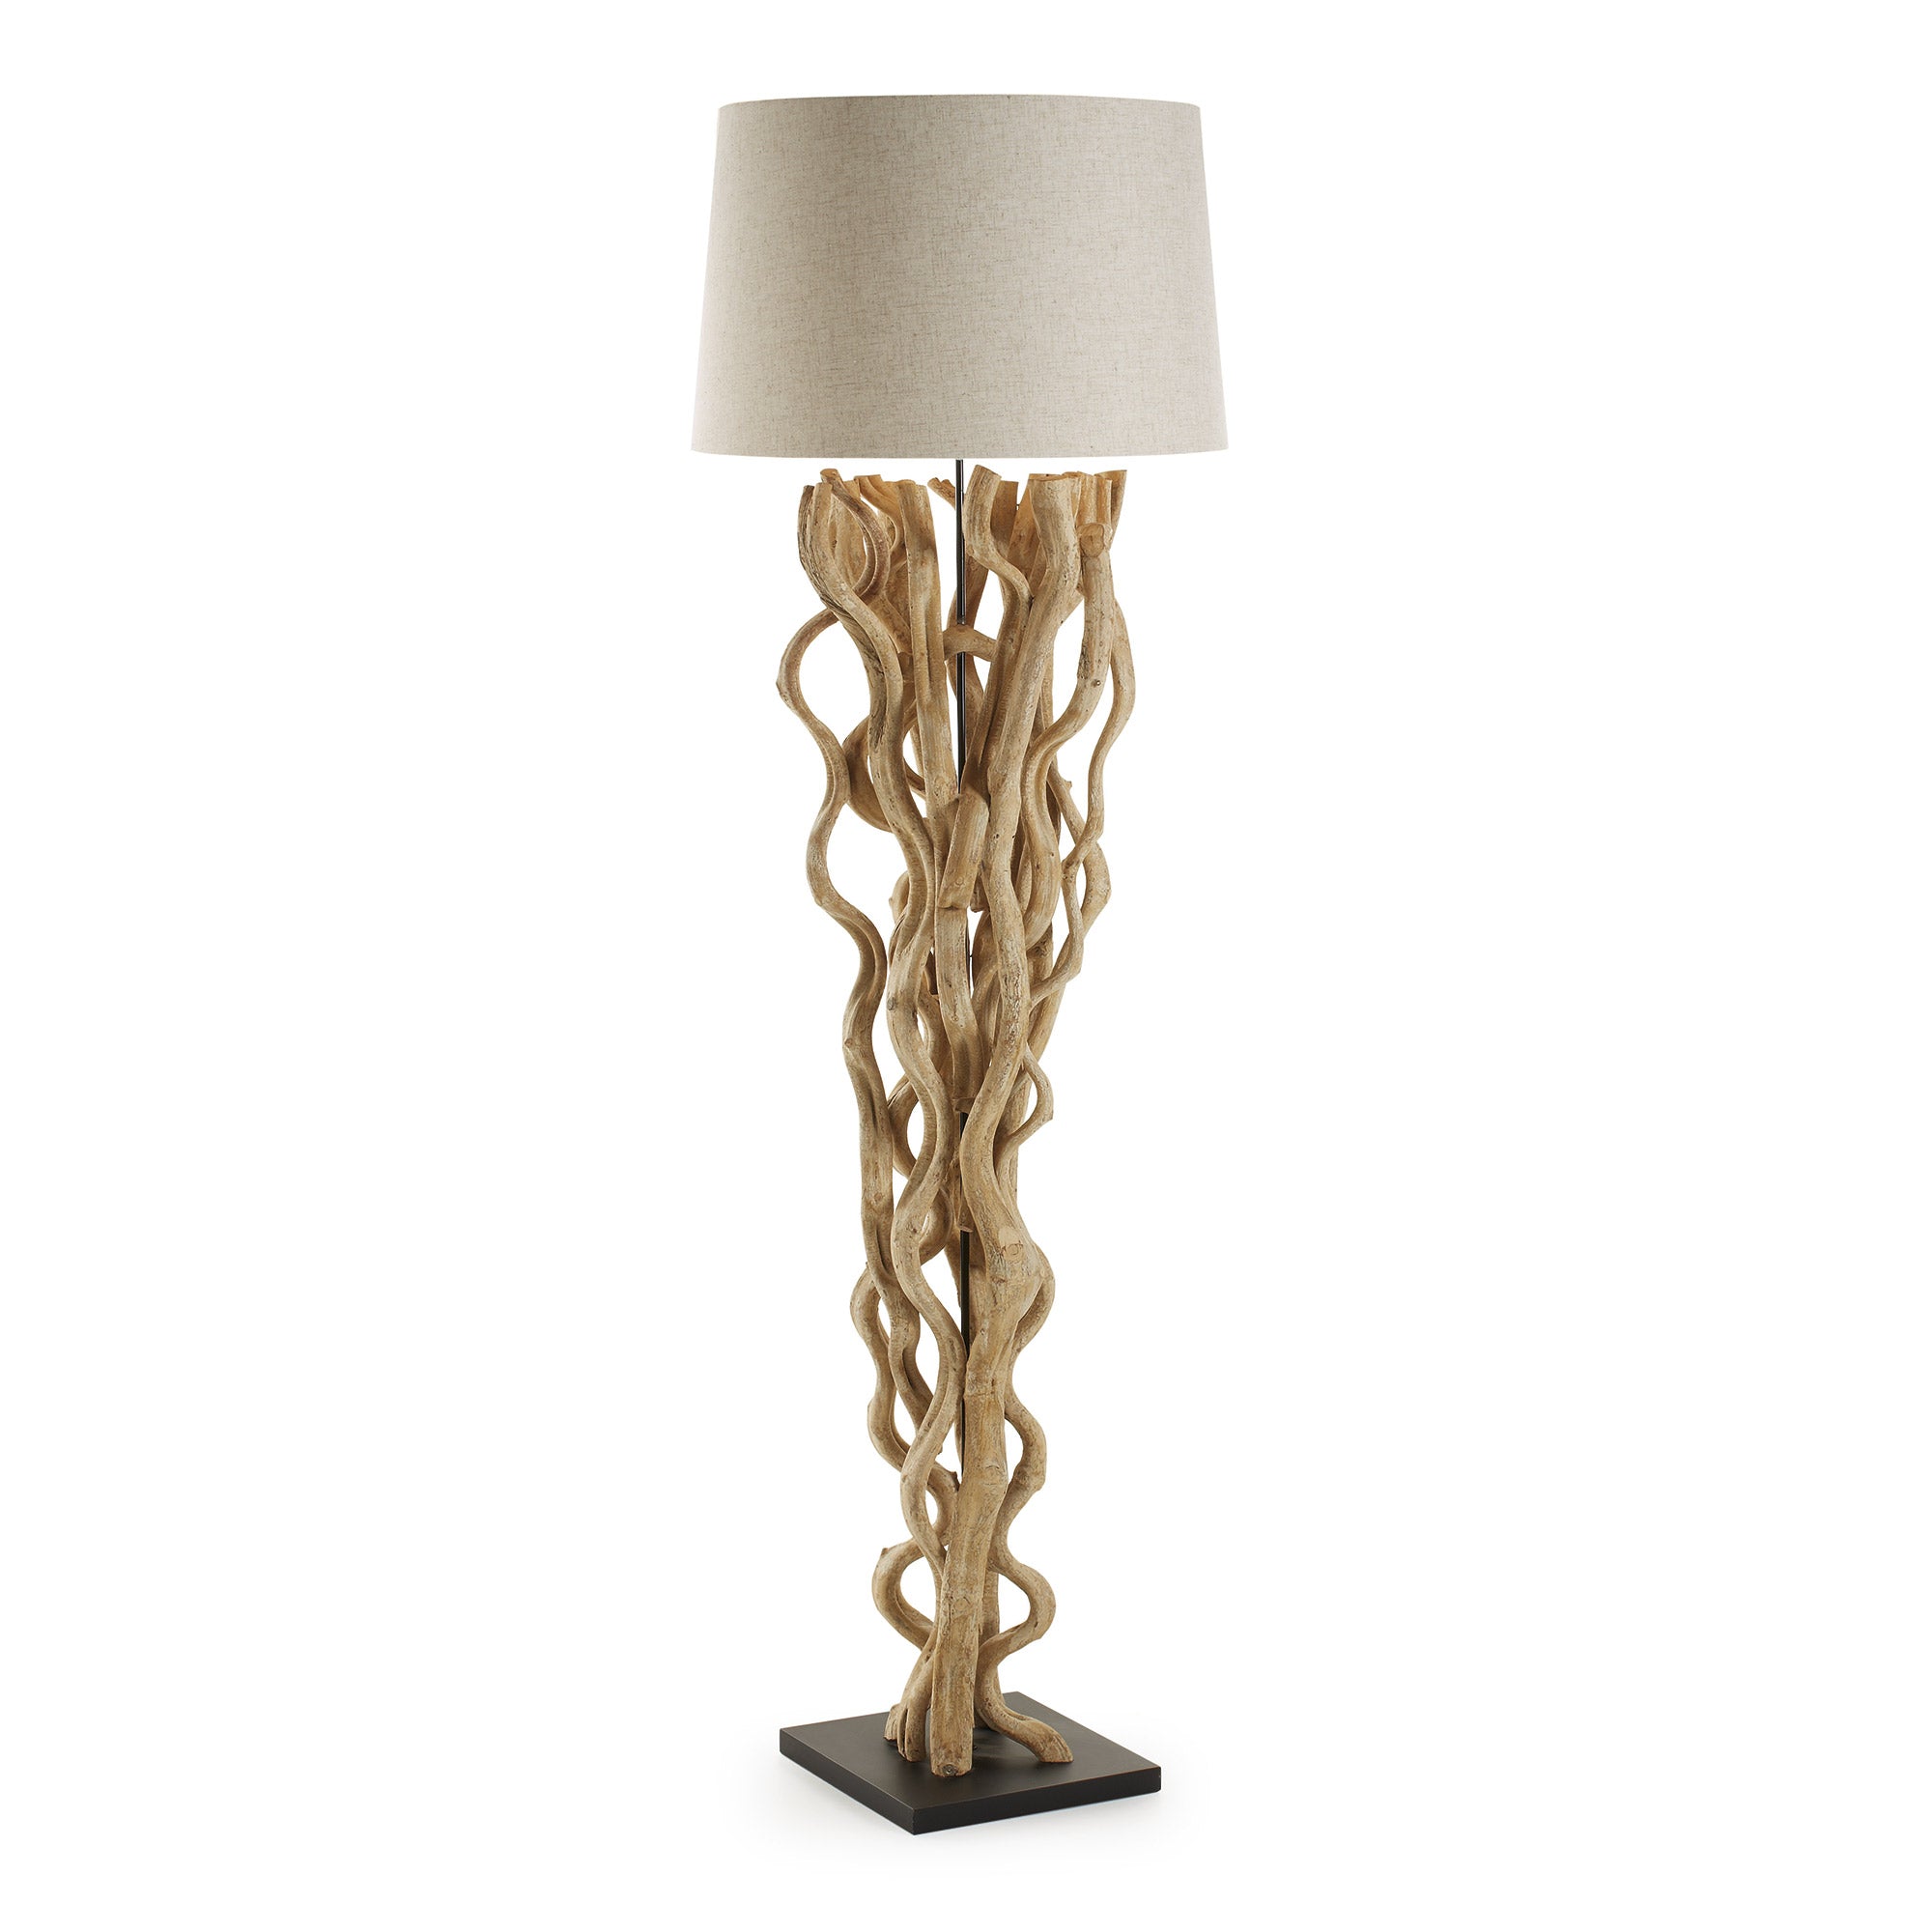 Nuba floor lamp in vine wood with white lampshade